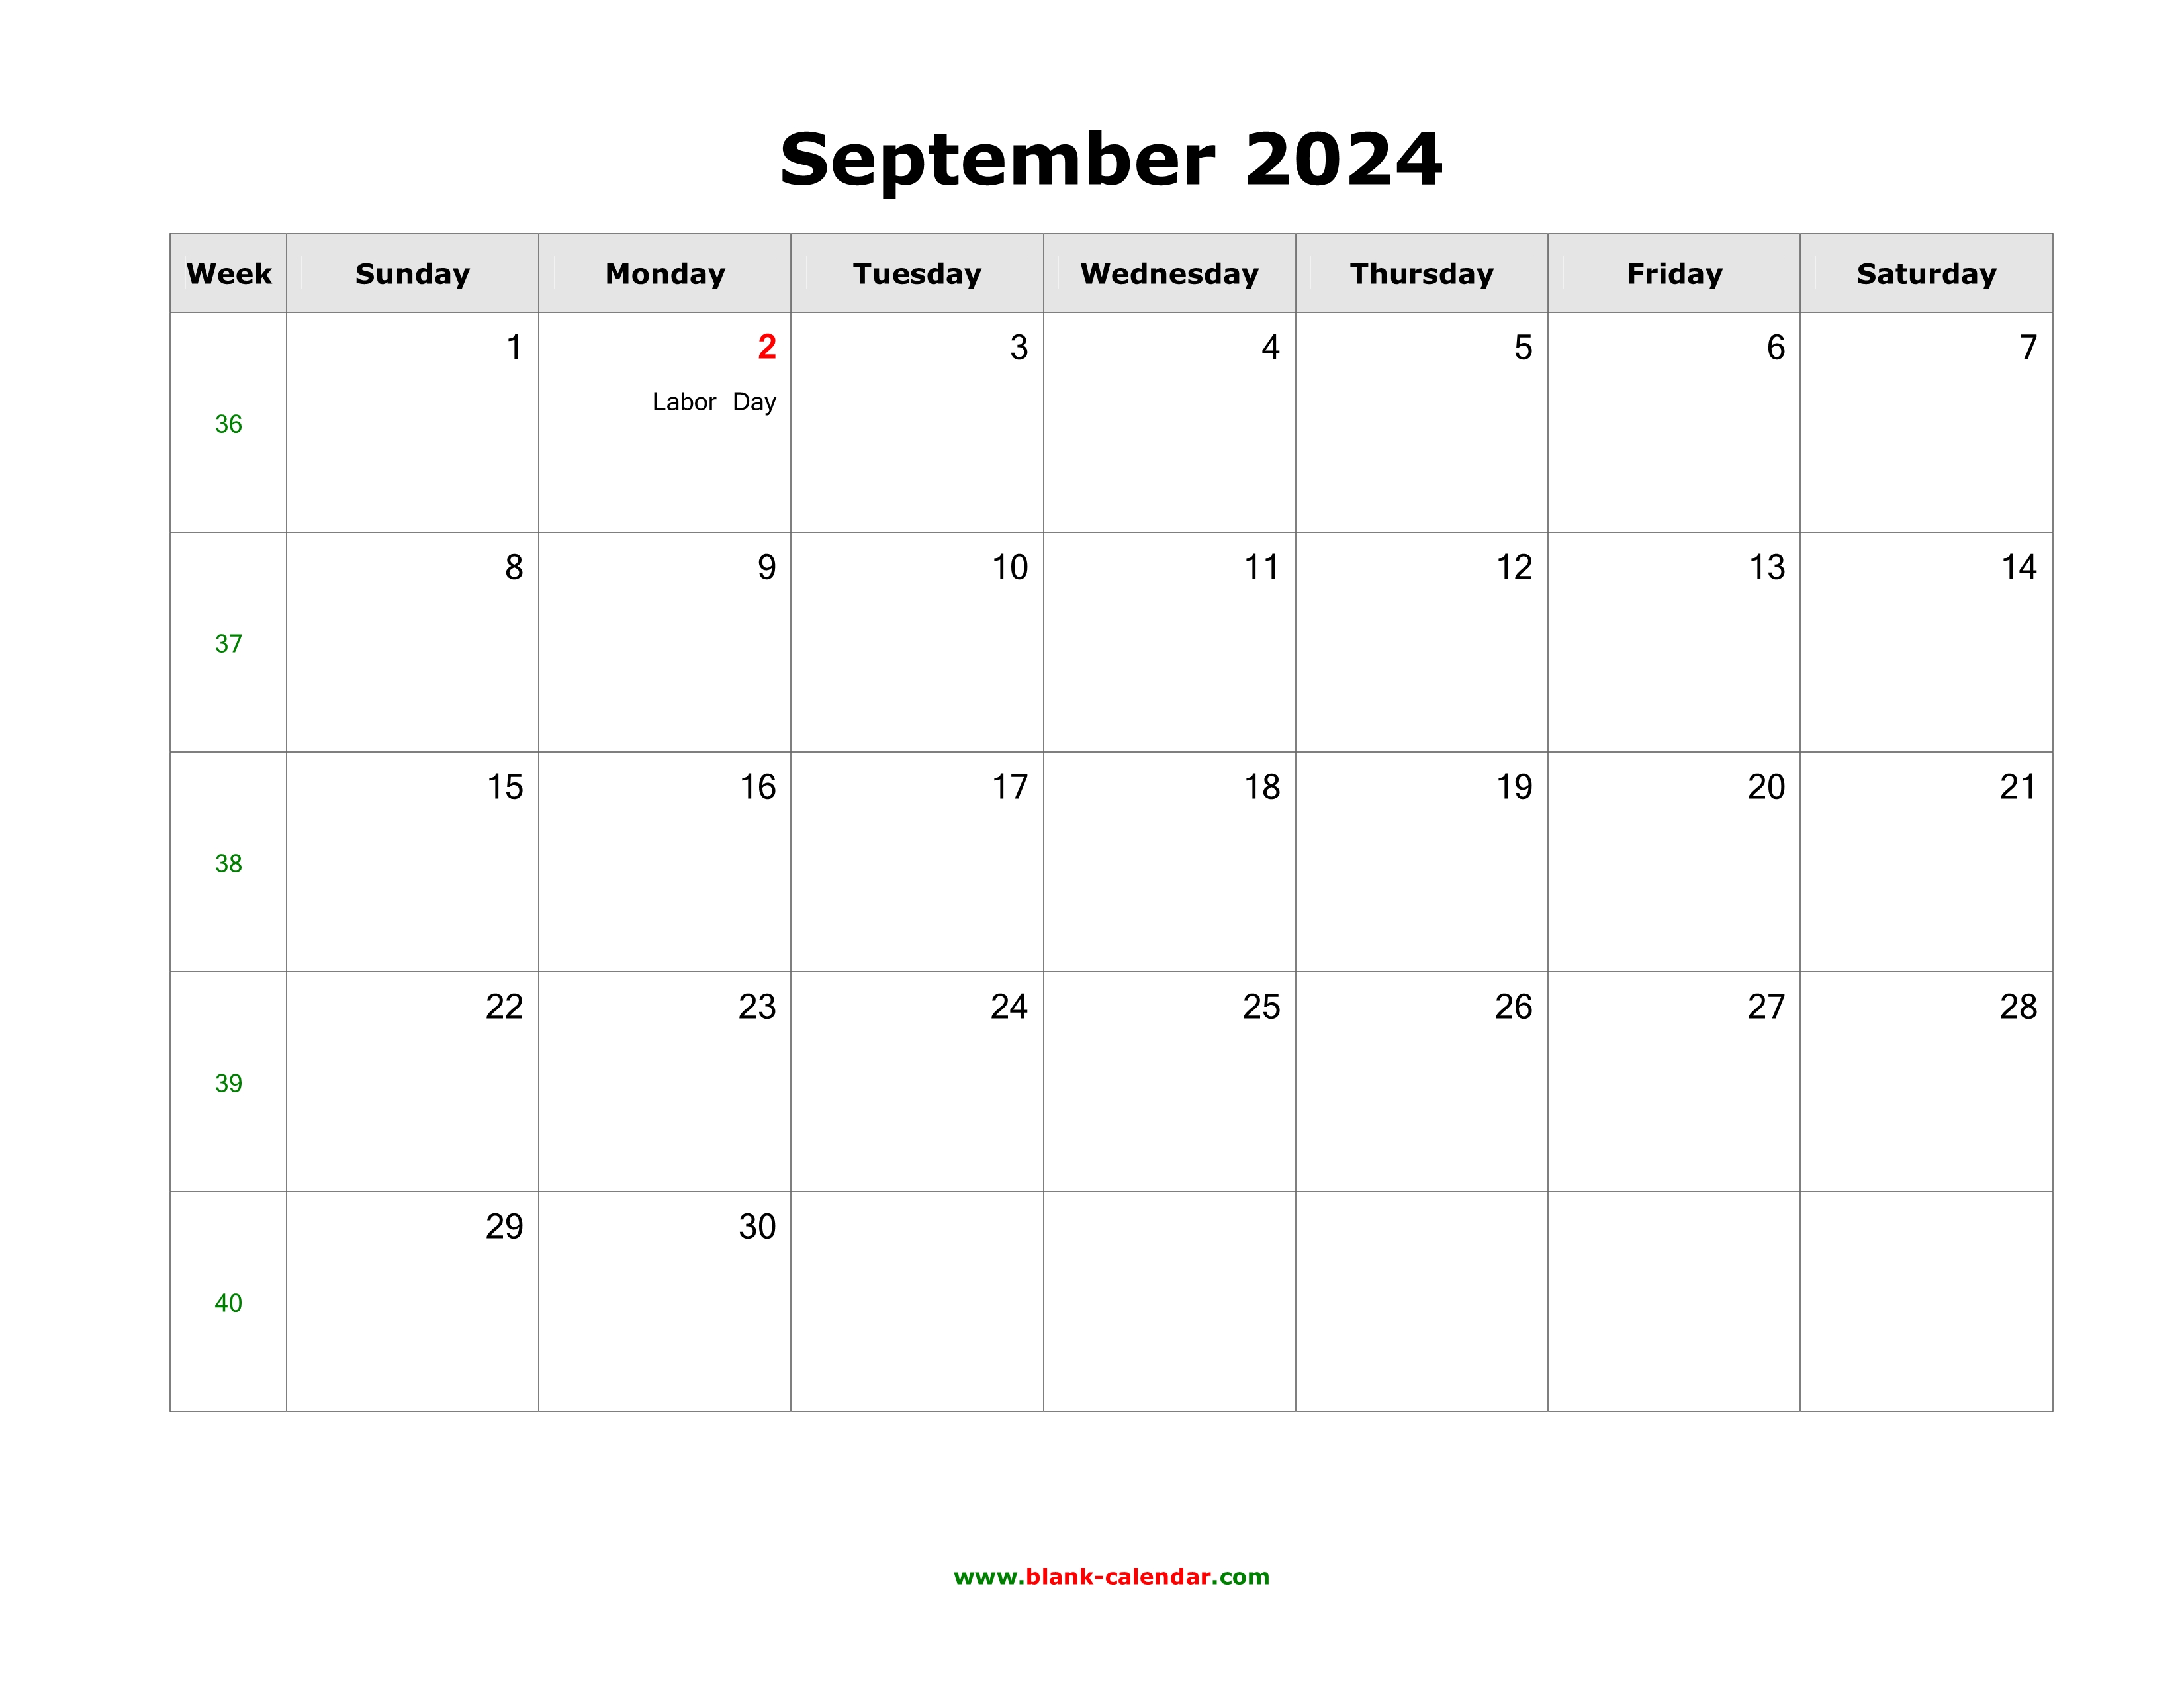 Download September 2024 Blank Calendar with US Holidays (horizontal)